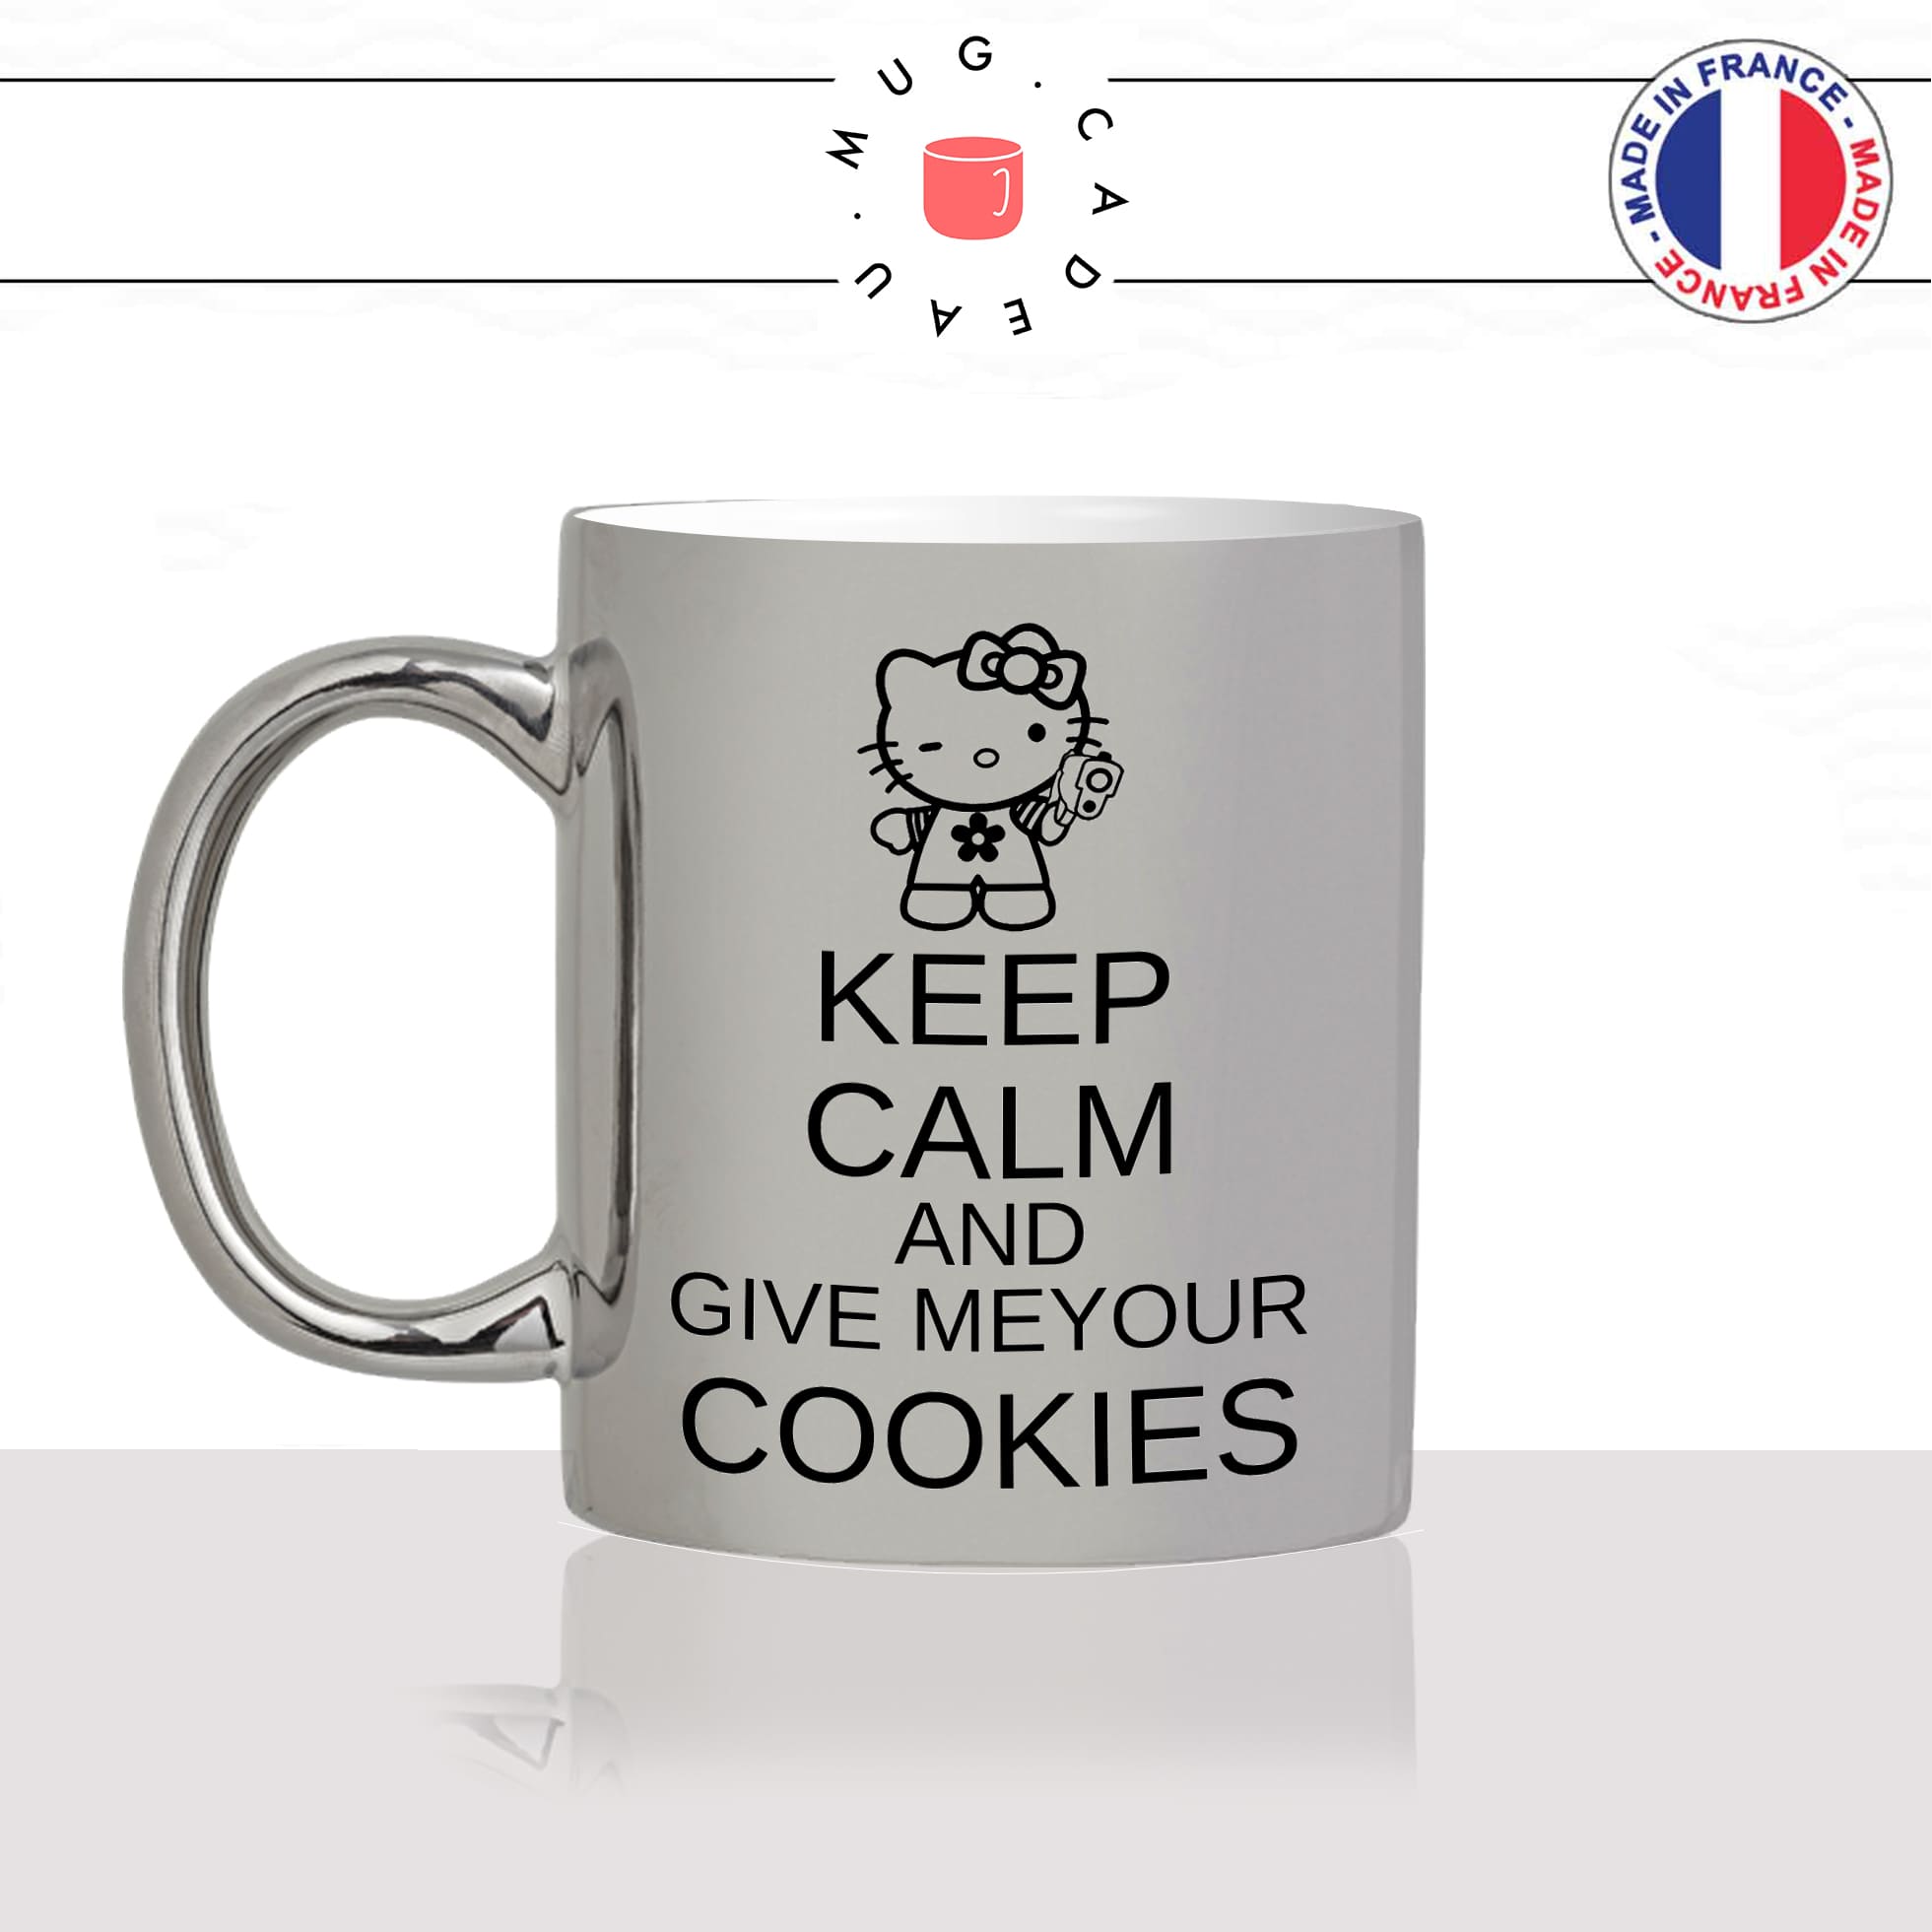 mug-tasse-argent-argenté-silver-keep-calm-and-give-me-your-cookies-hello-kitty-chat-arme-fusil-stylé-humour-idée-cadeau-fun-cool-café-thé